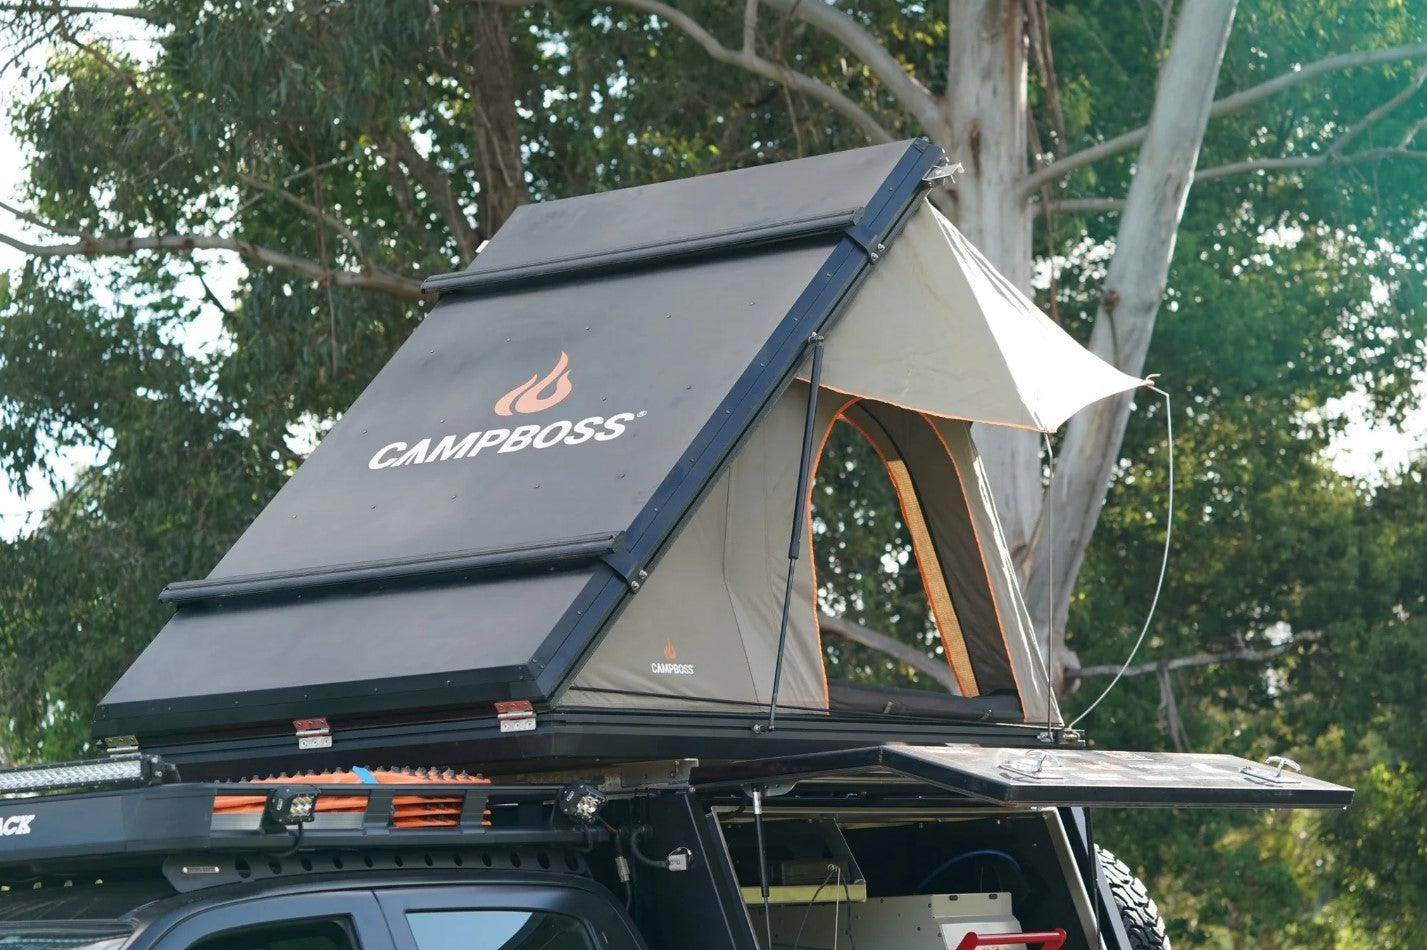 Tente de toit avec coque rigide en aluminium de la marque campboss sur 4X4